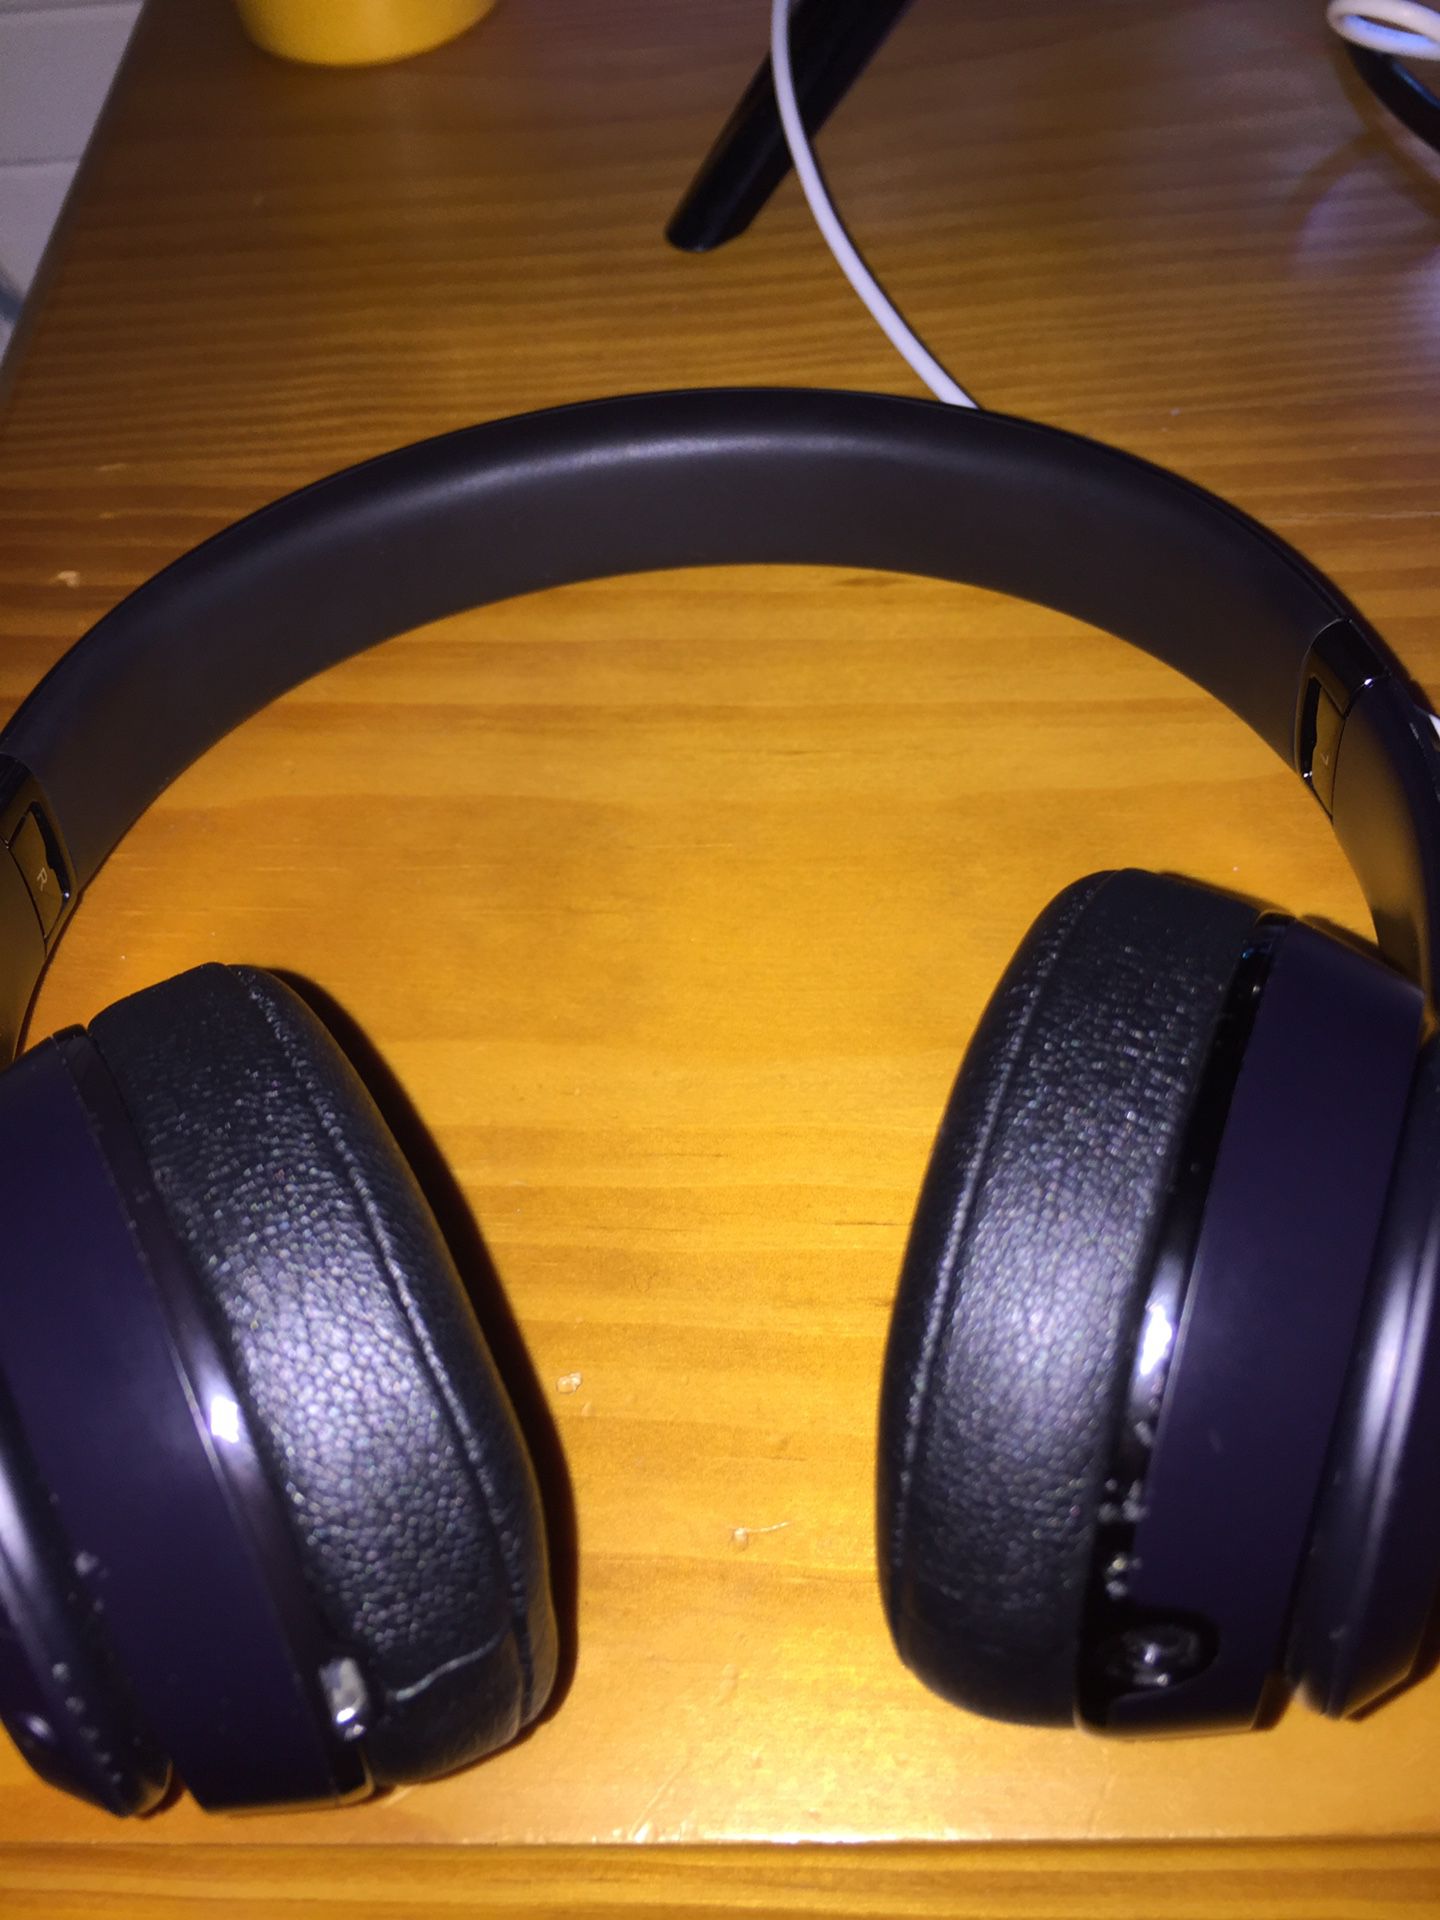 BLACK BEATS SOLO 3s wireless headphones